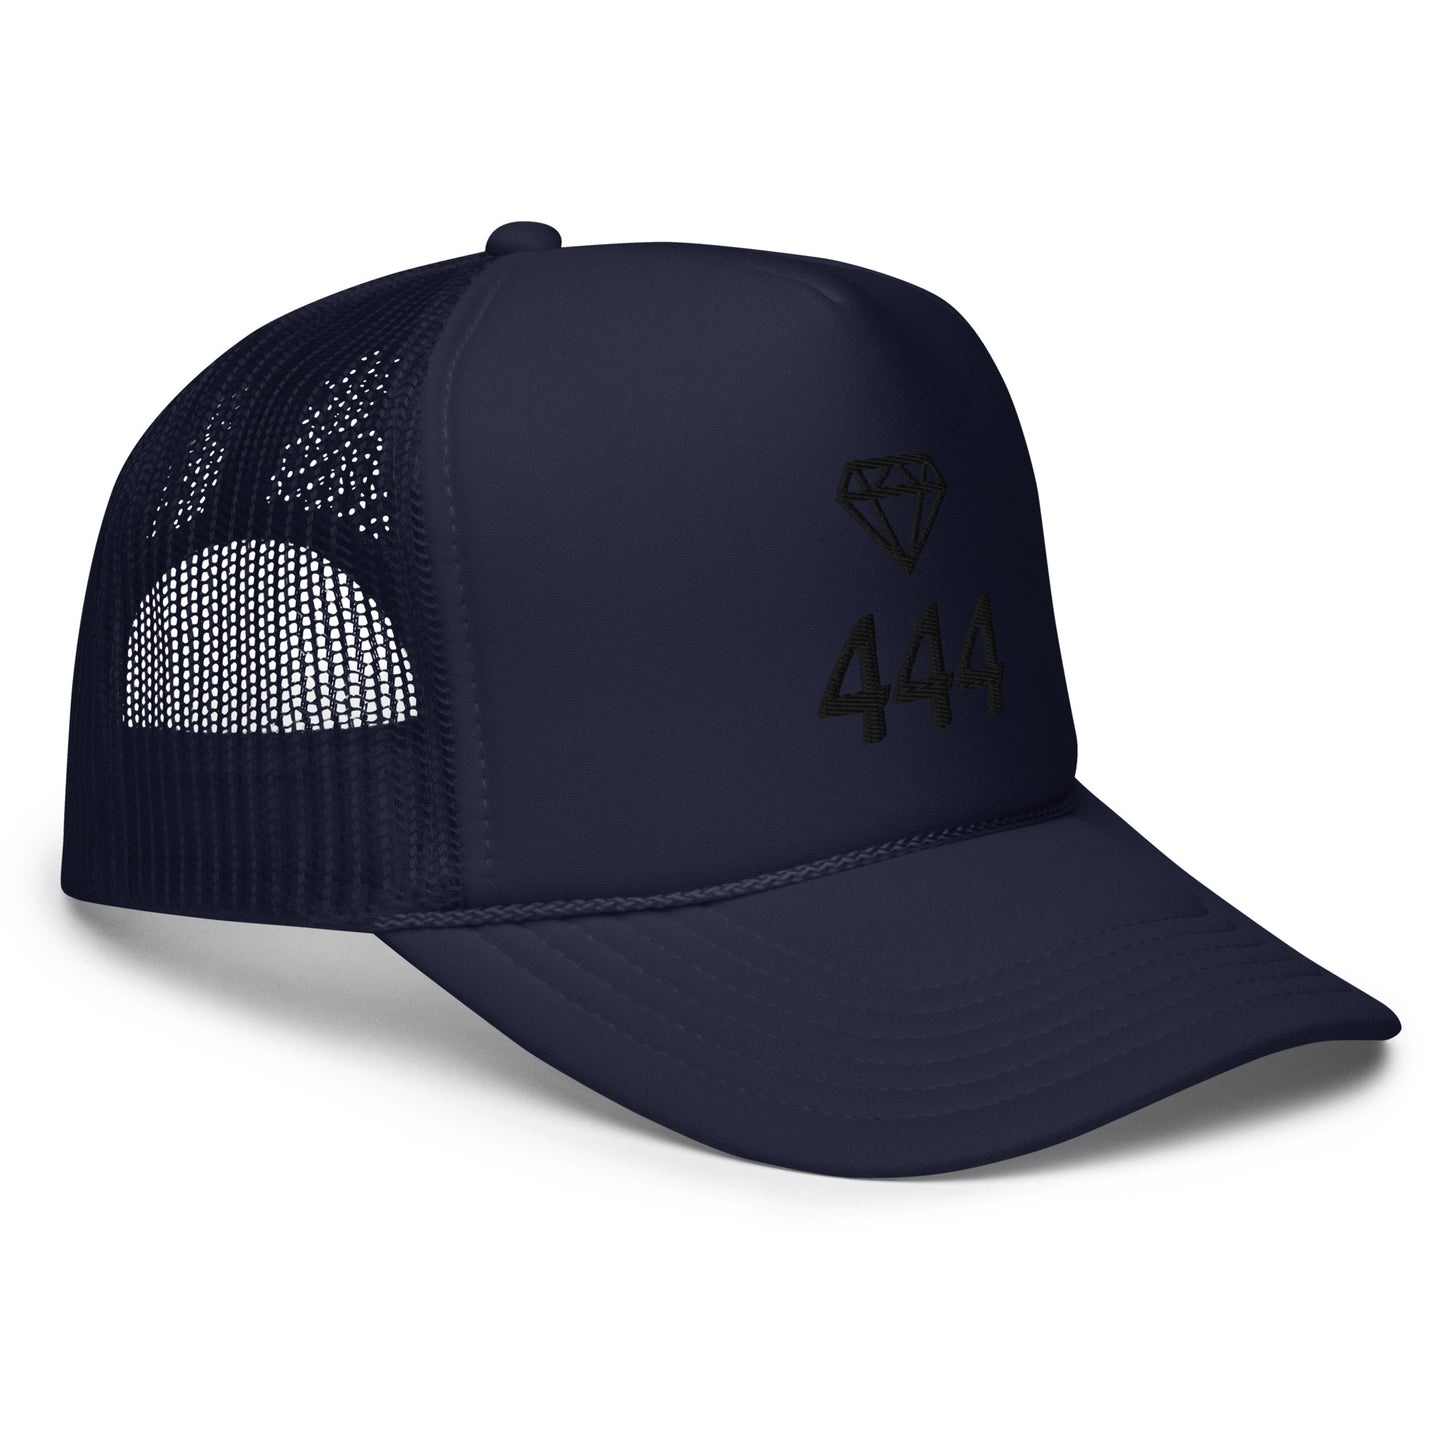 444 trucker hat